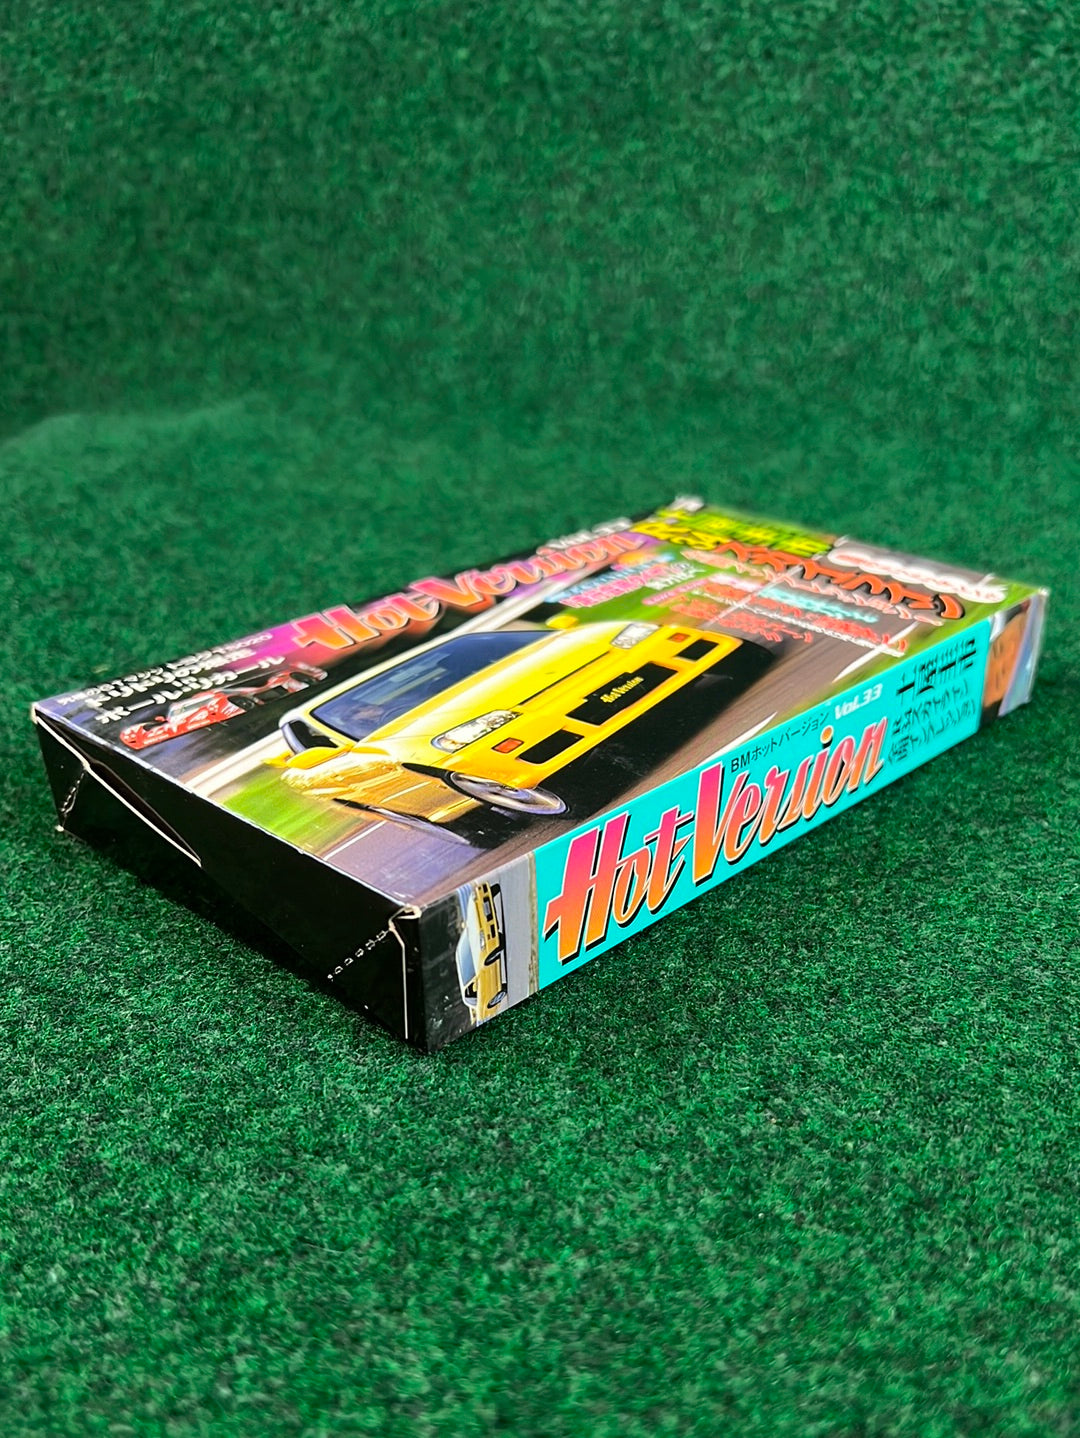 Hot Version VHS - Vol. 33